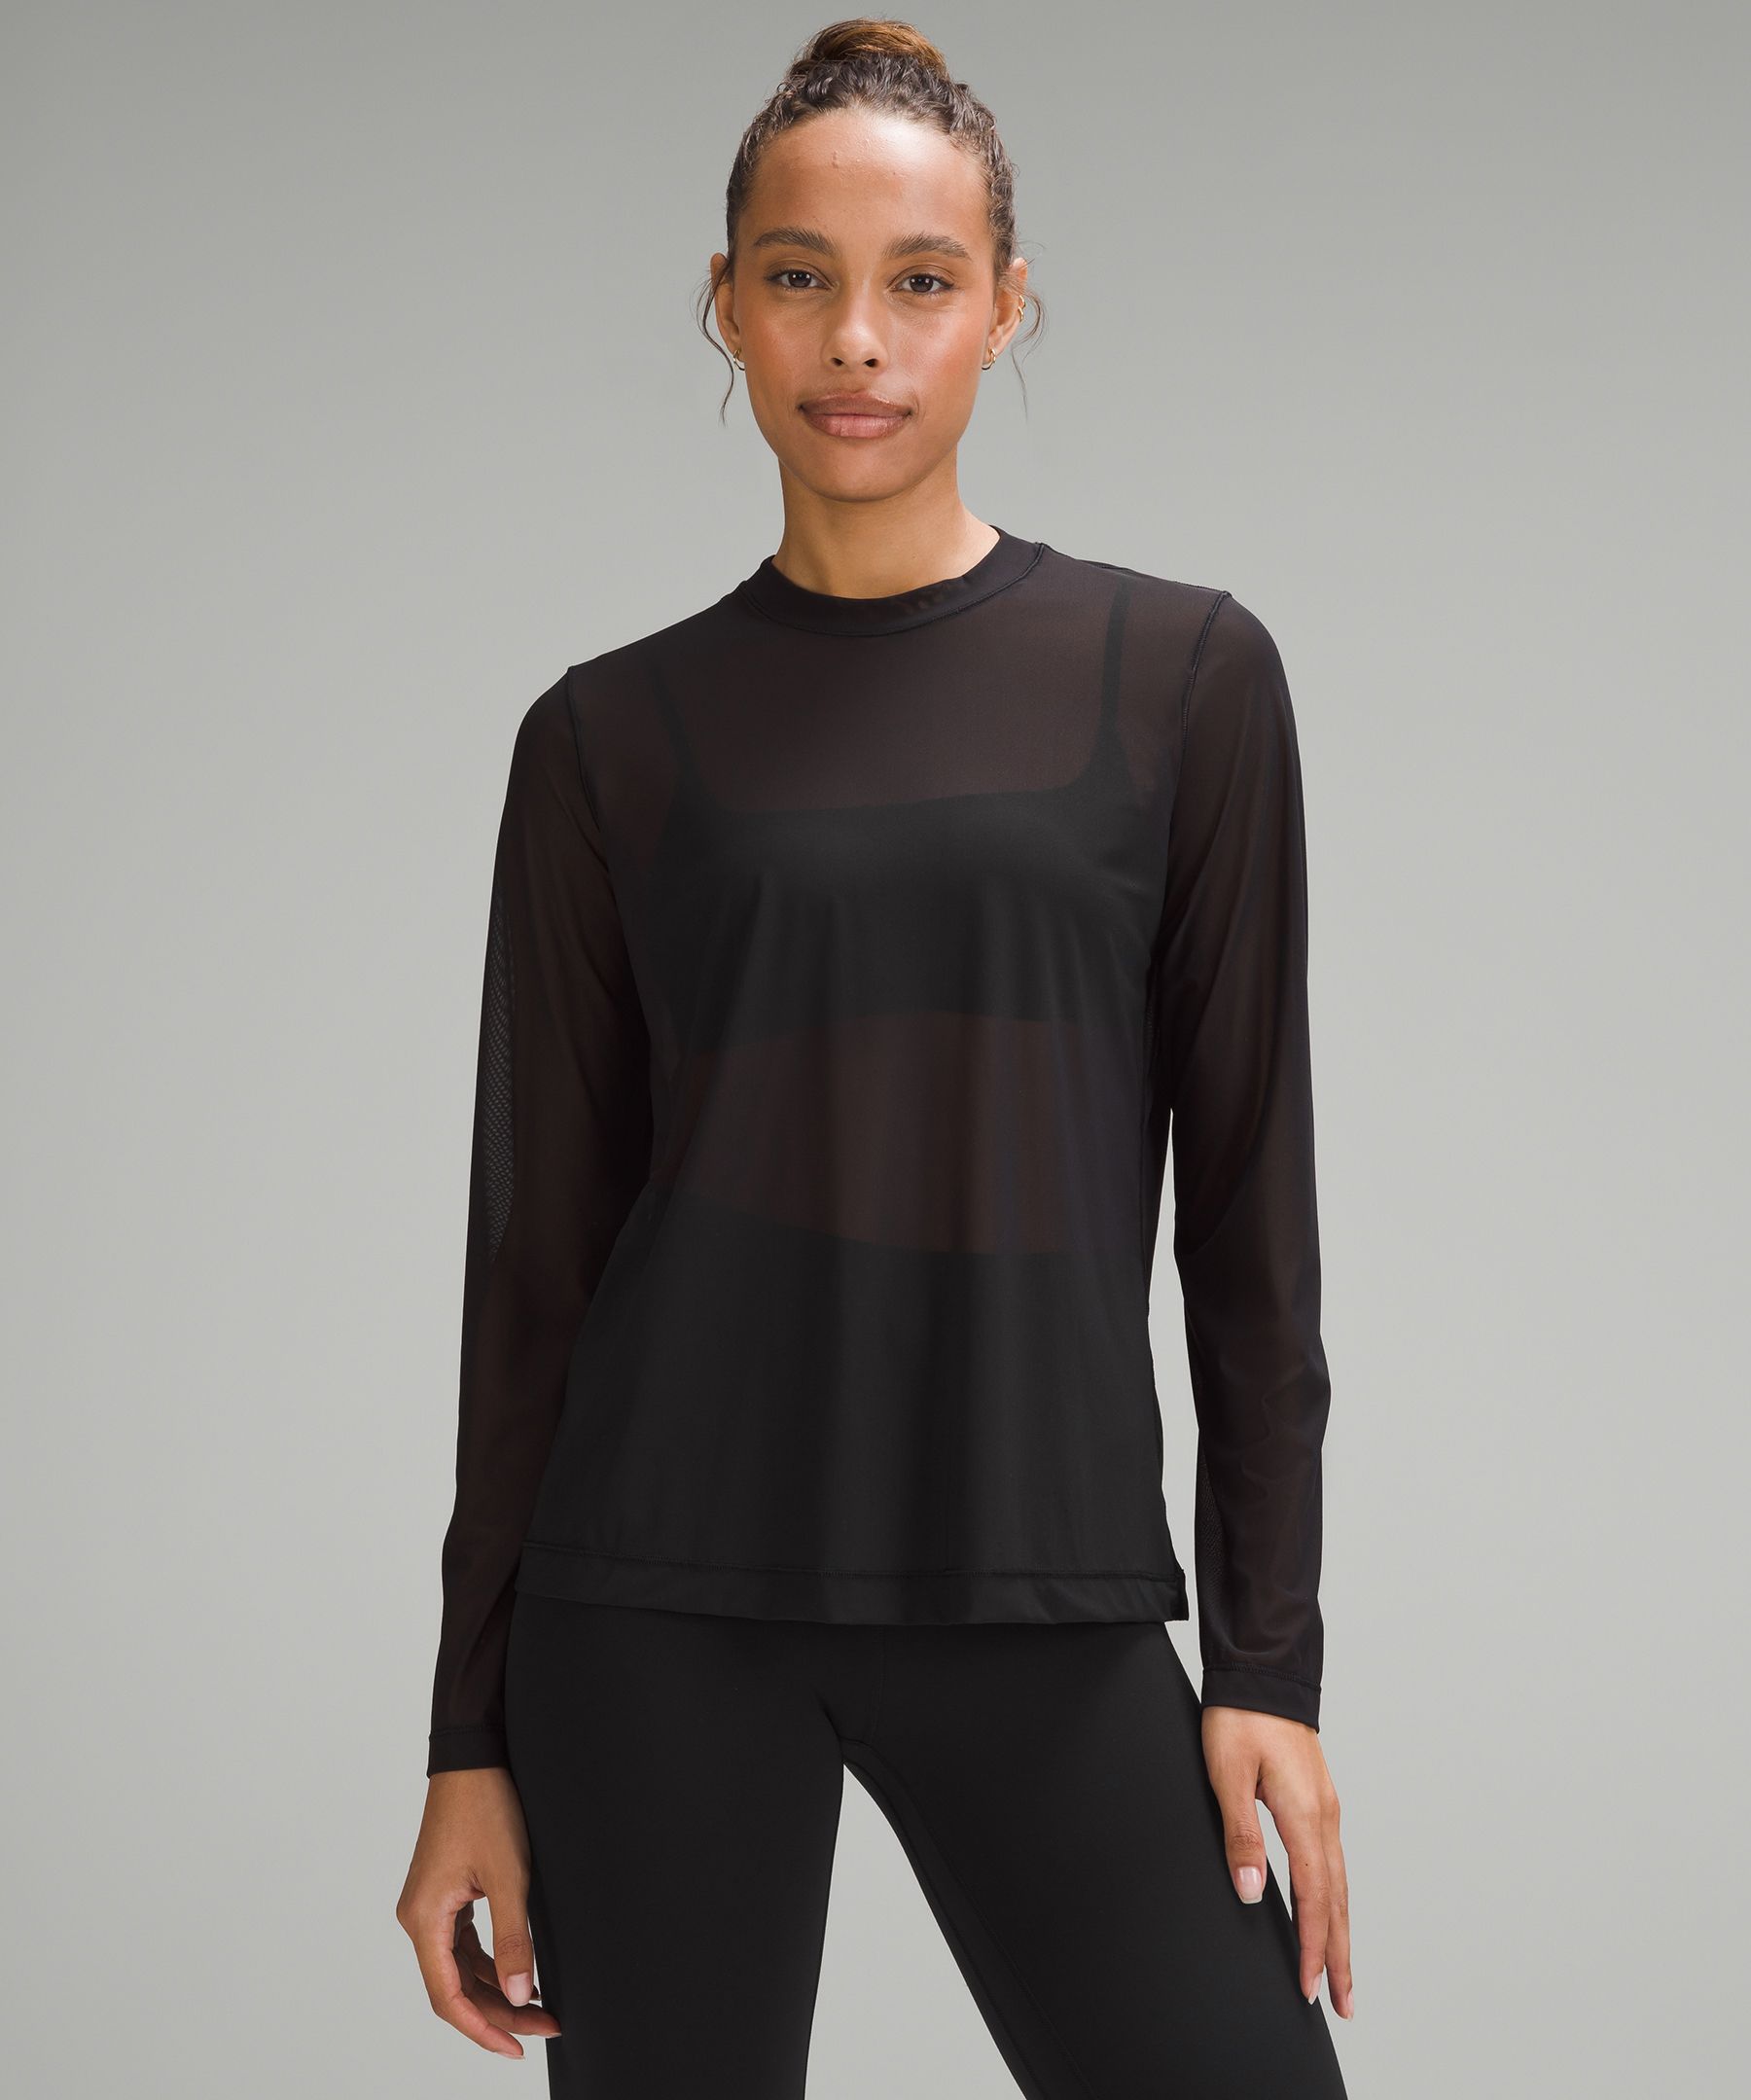 Lululemon Athletica Solid Black Long Sleeve T-Shirt Size 10 - 46